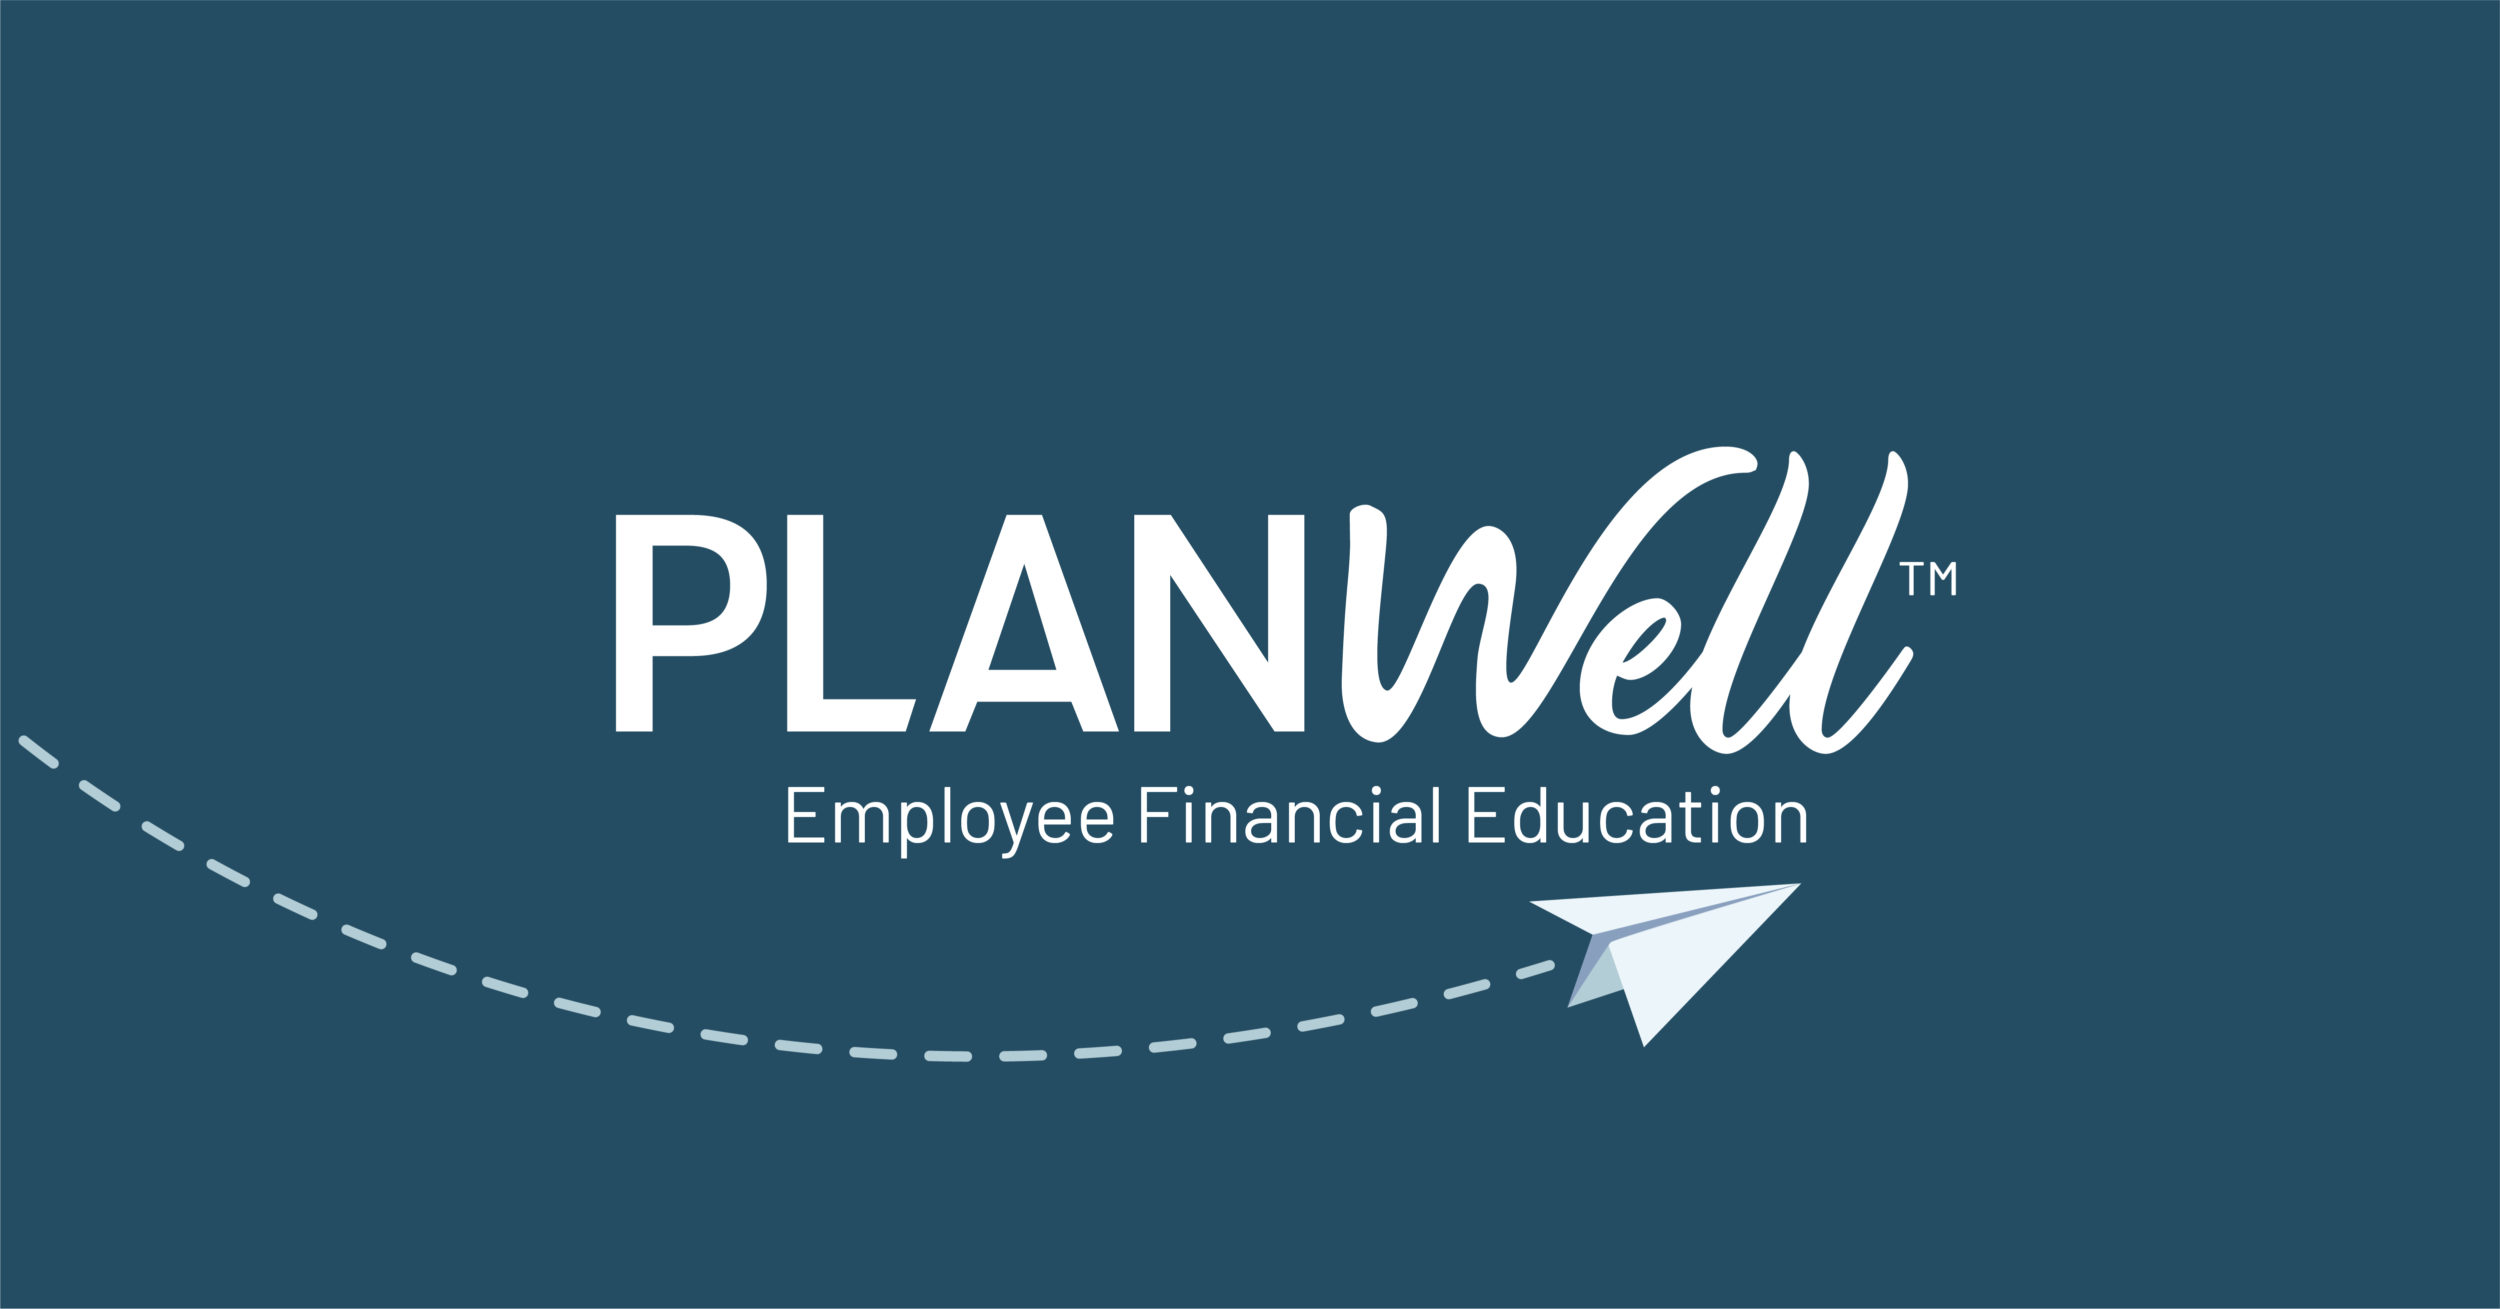 PlanWell™